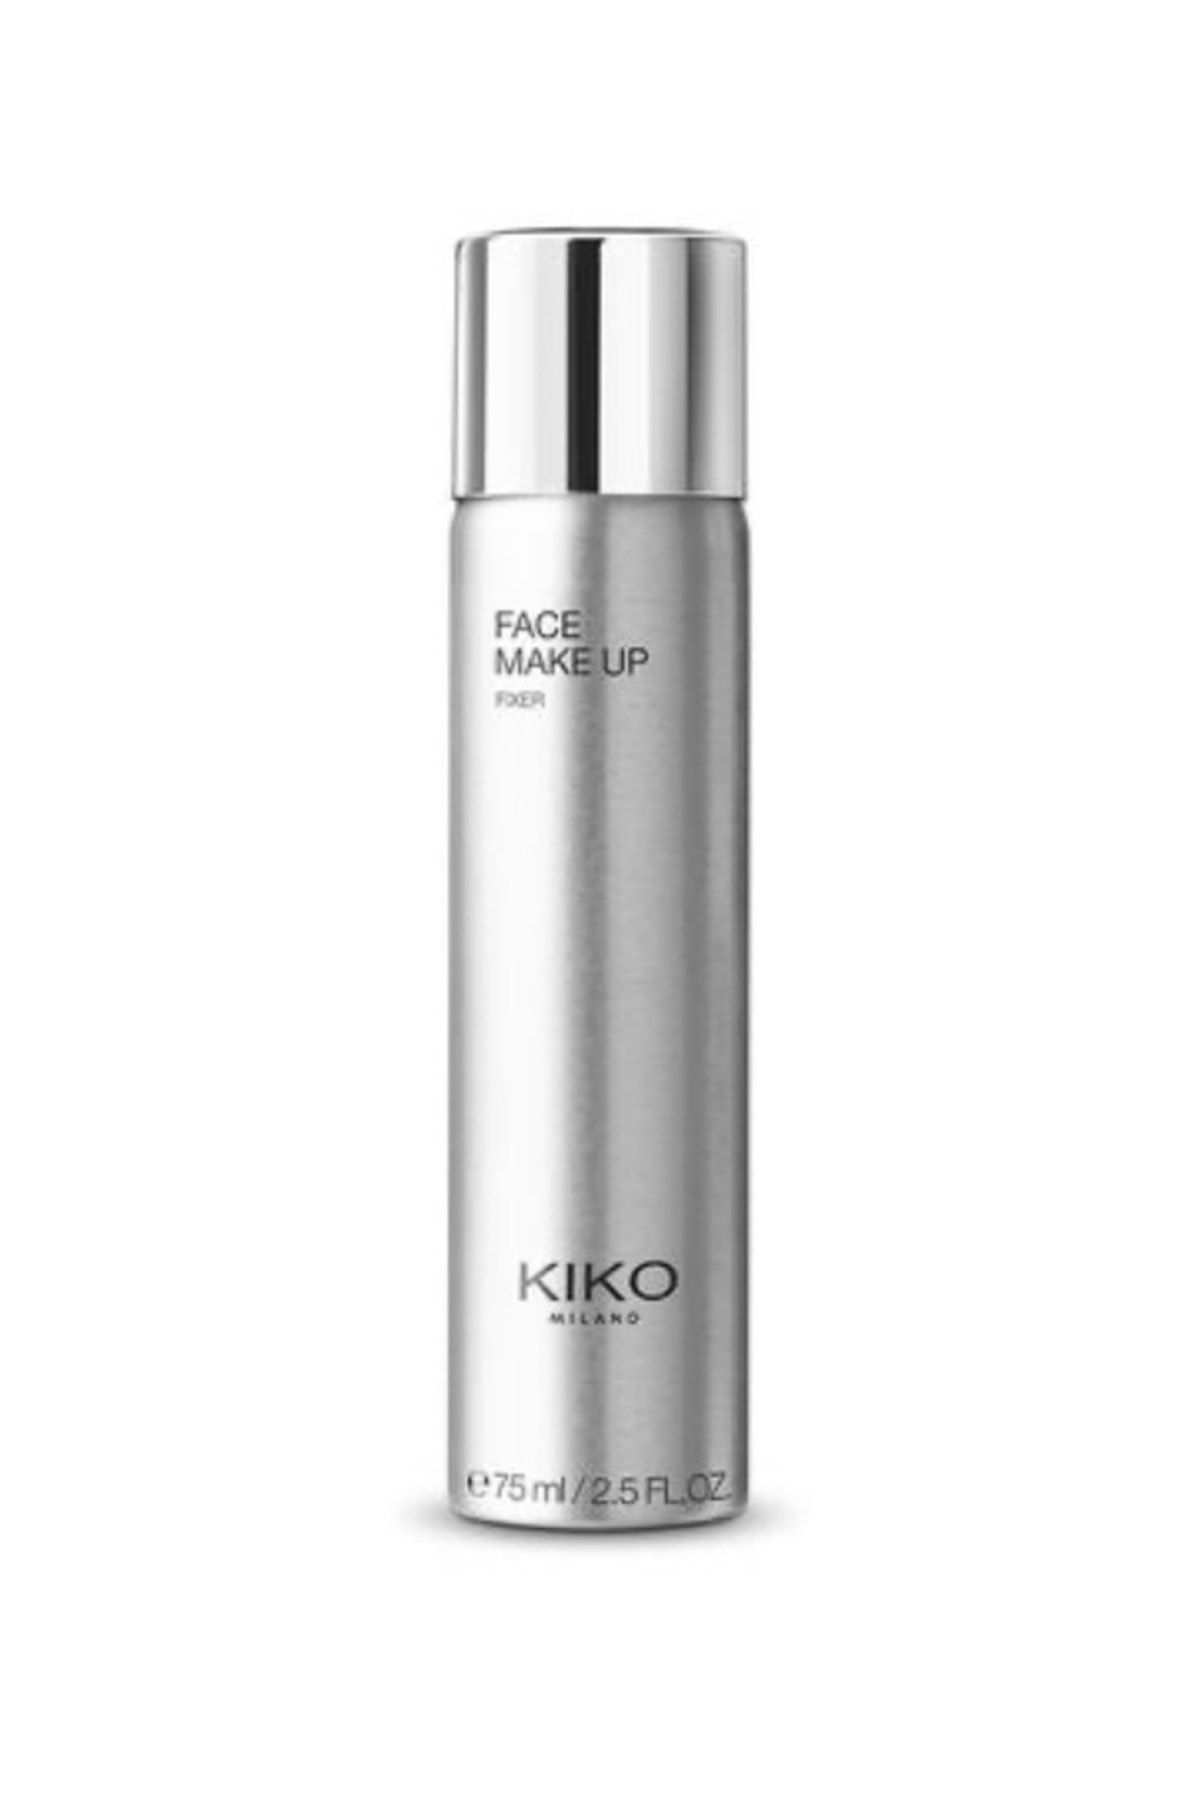 KIKO ضد آب و ضد عرق ثابت کننده آرایش